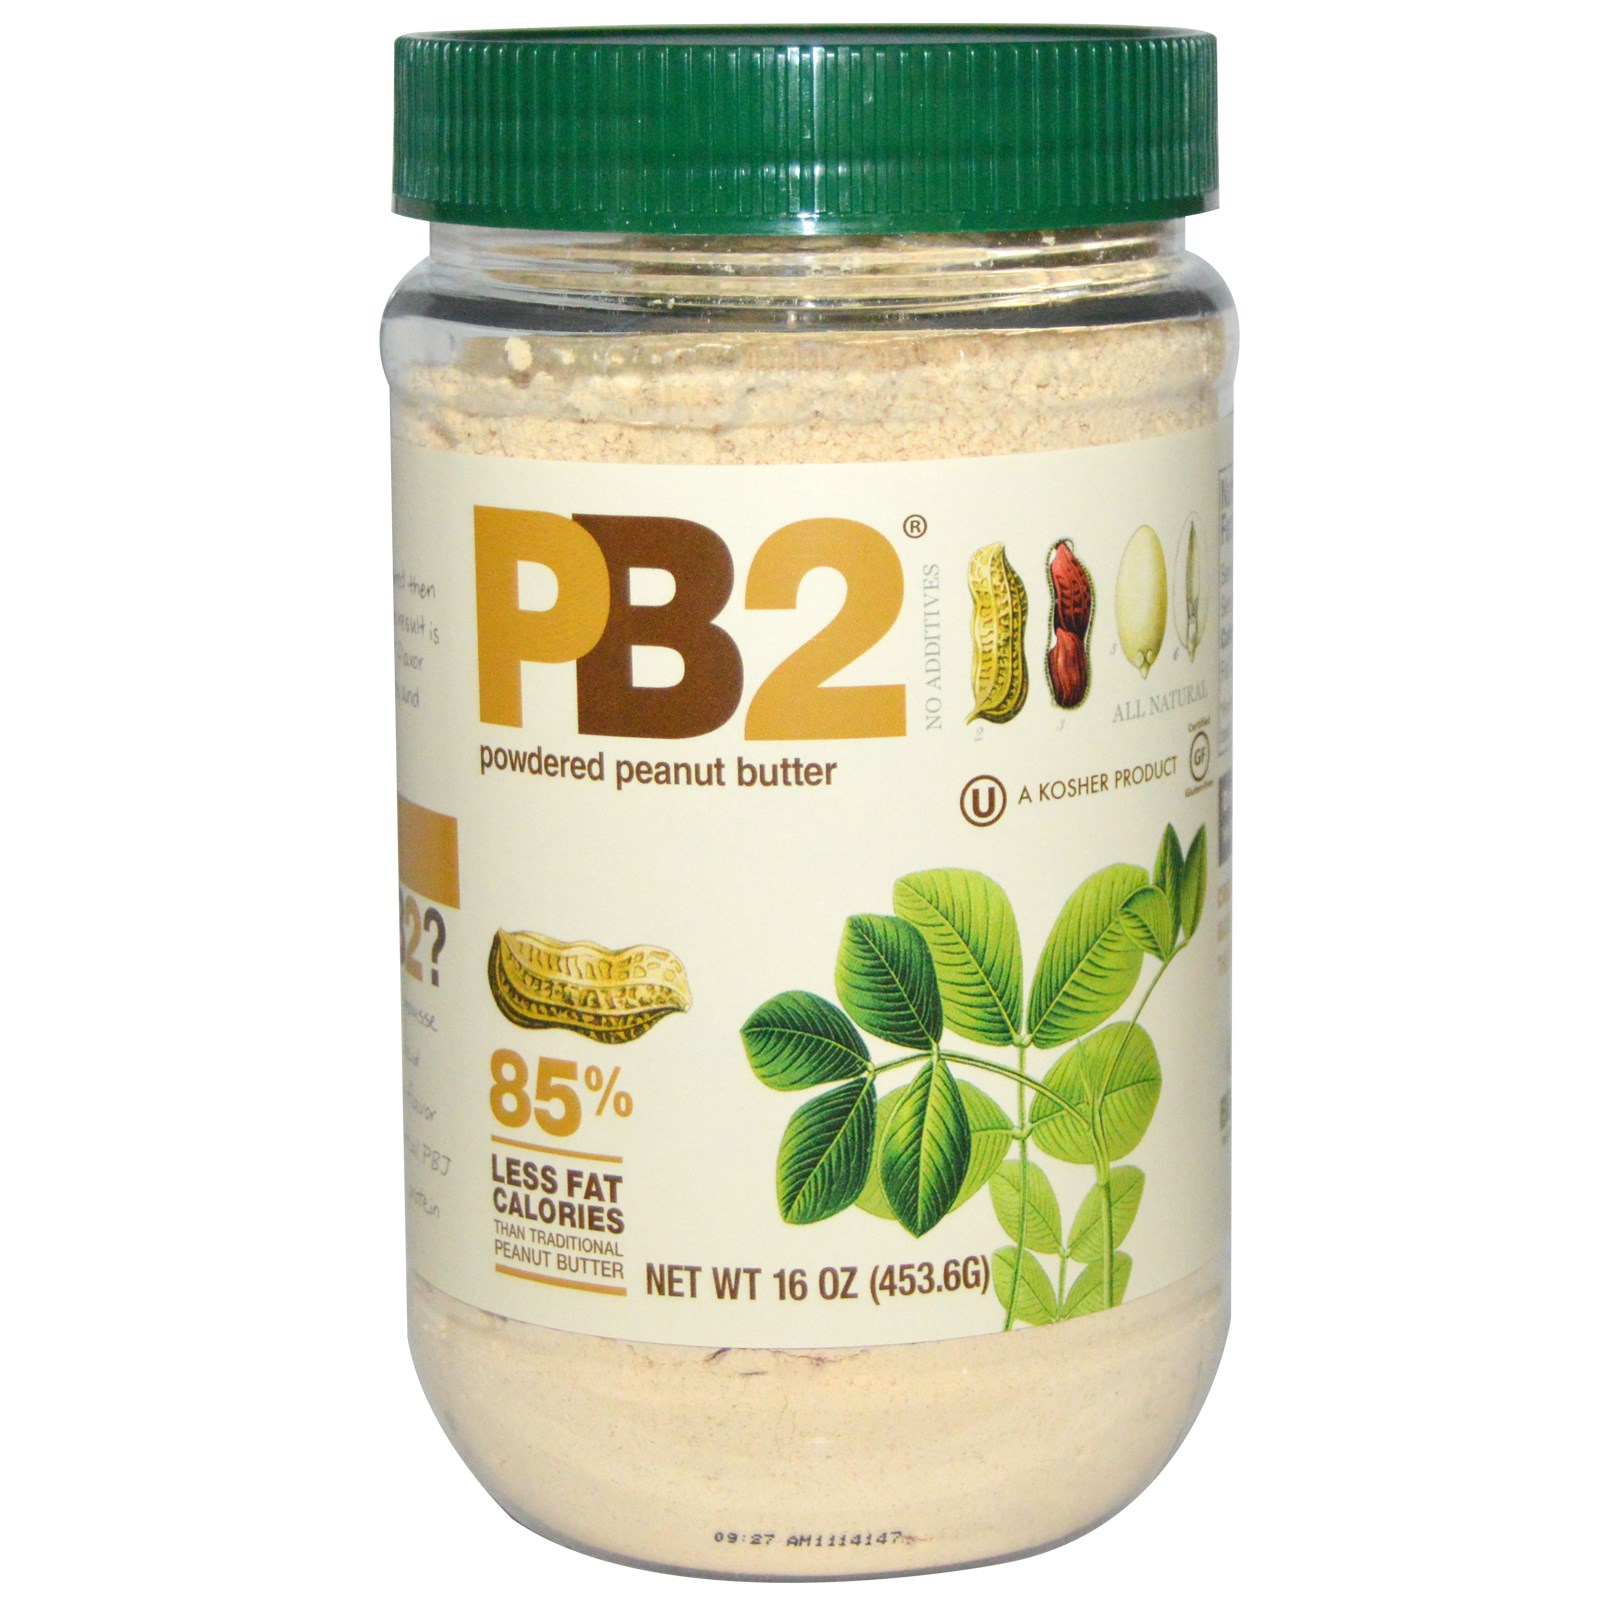 QUEST NUTRITION Peanut Butter Protein Powder Reviews 2020